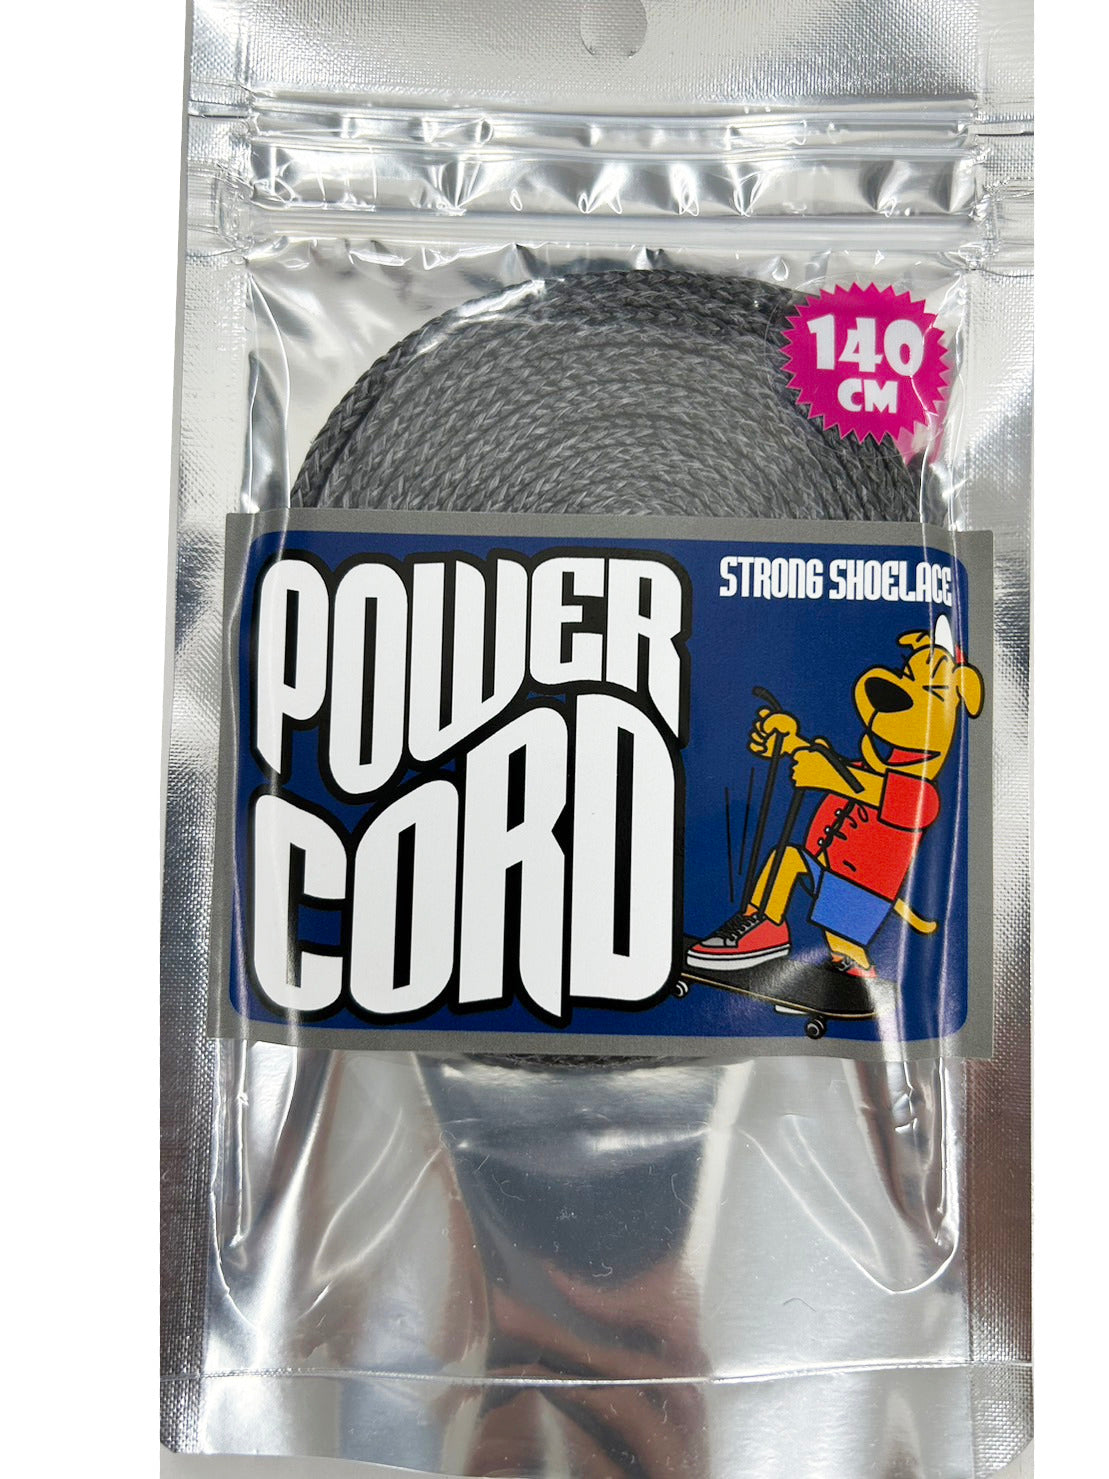 POWER CORD - 市販の靴紐の約１６倍の強度を持つ、切れにくいスケボー用靴紐